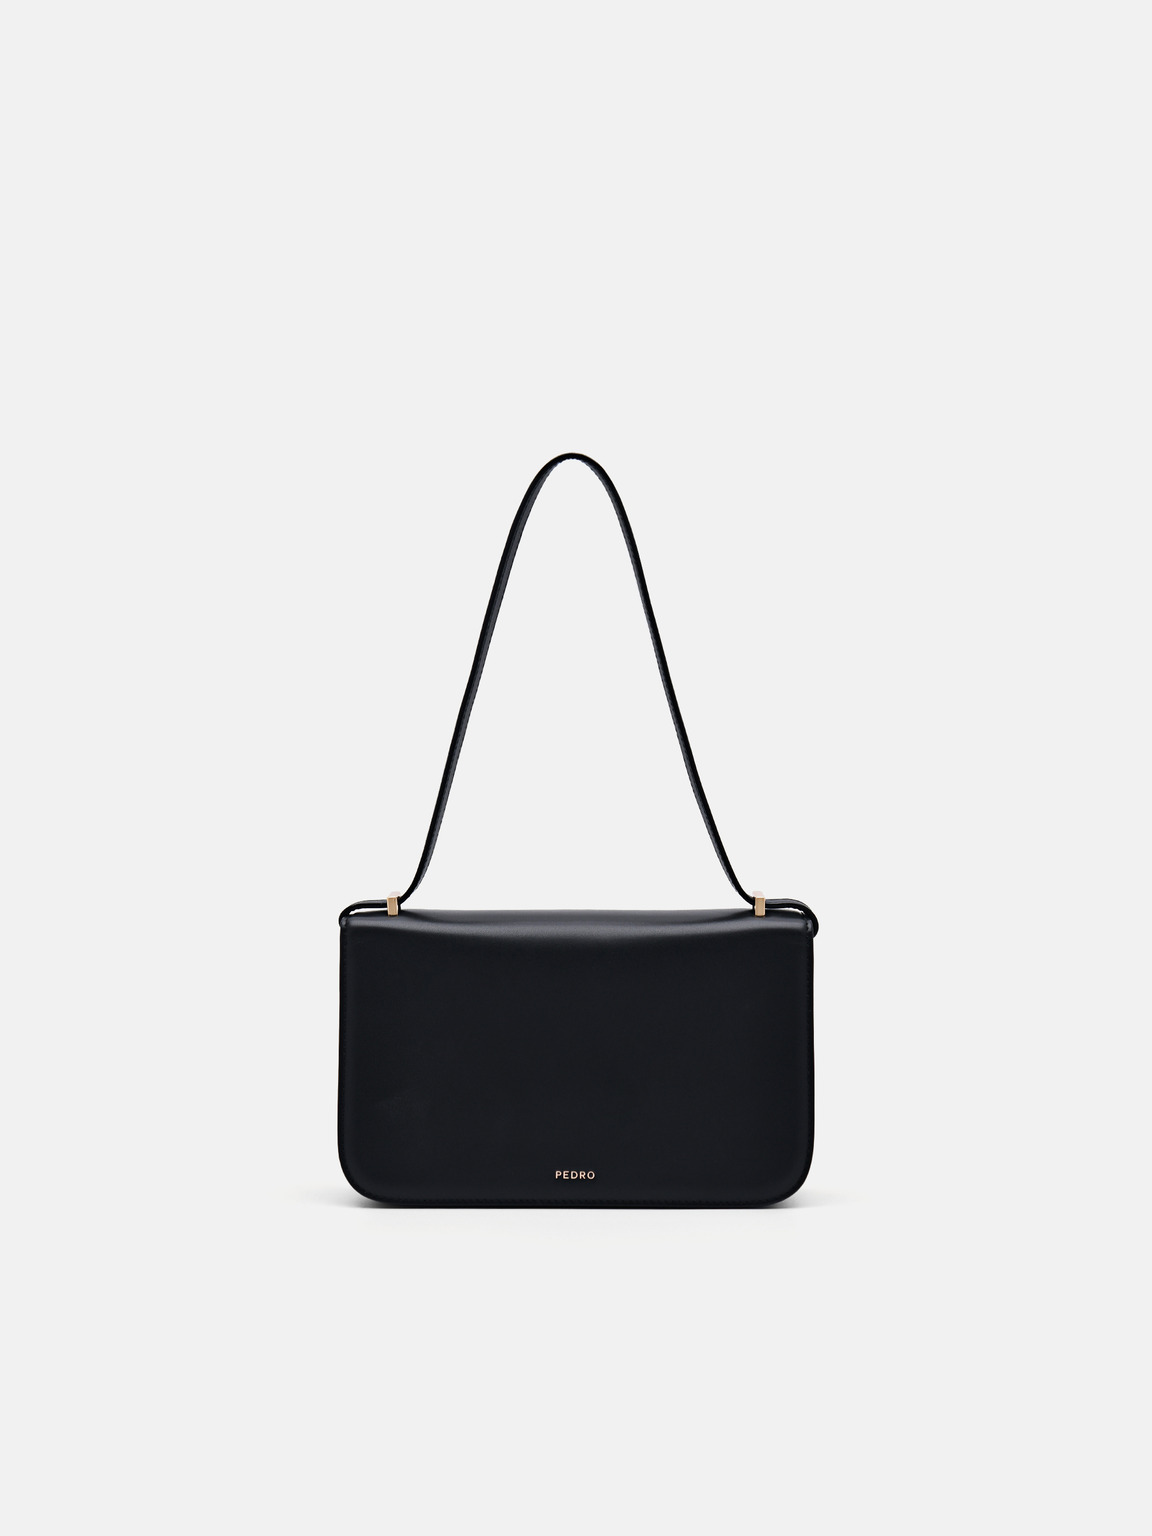 PEDRO Studio Kate Leather Envelope Bag, Black2